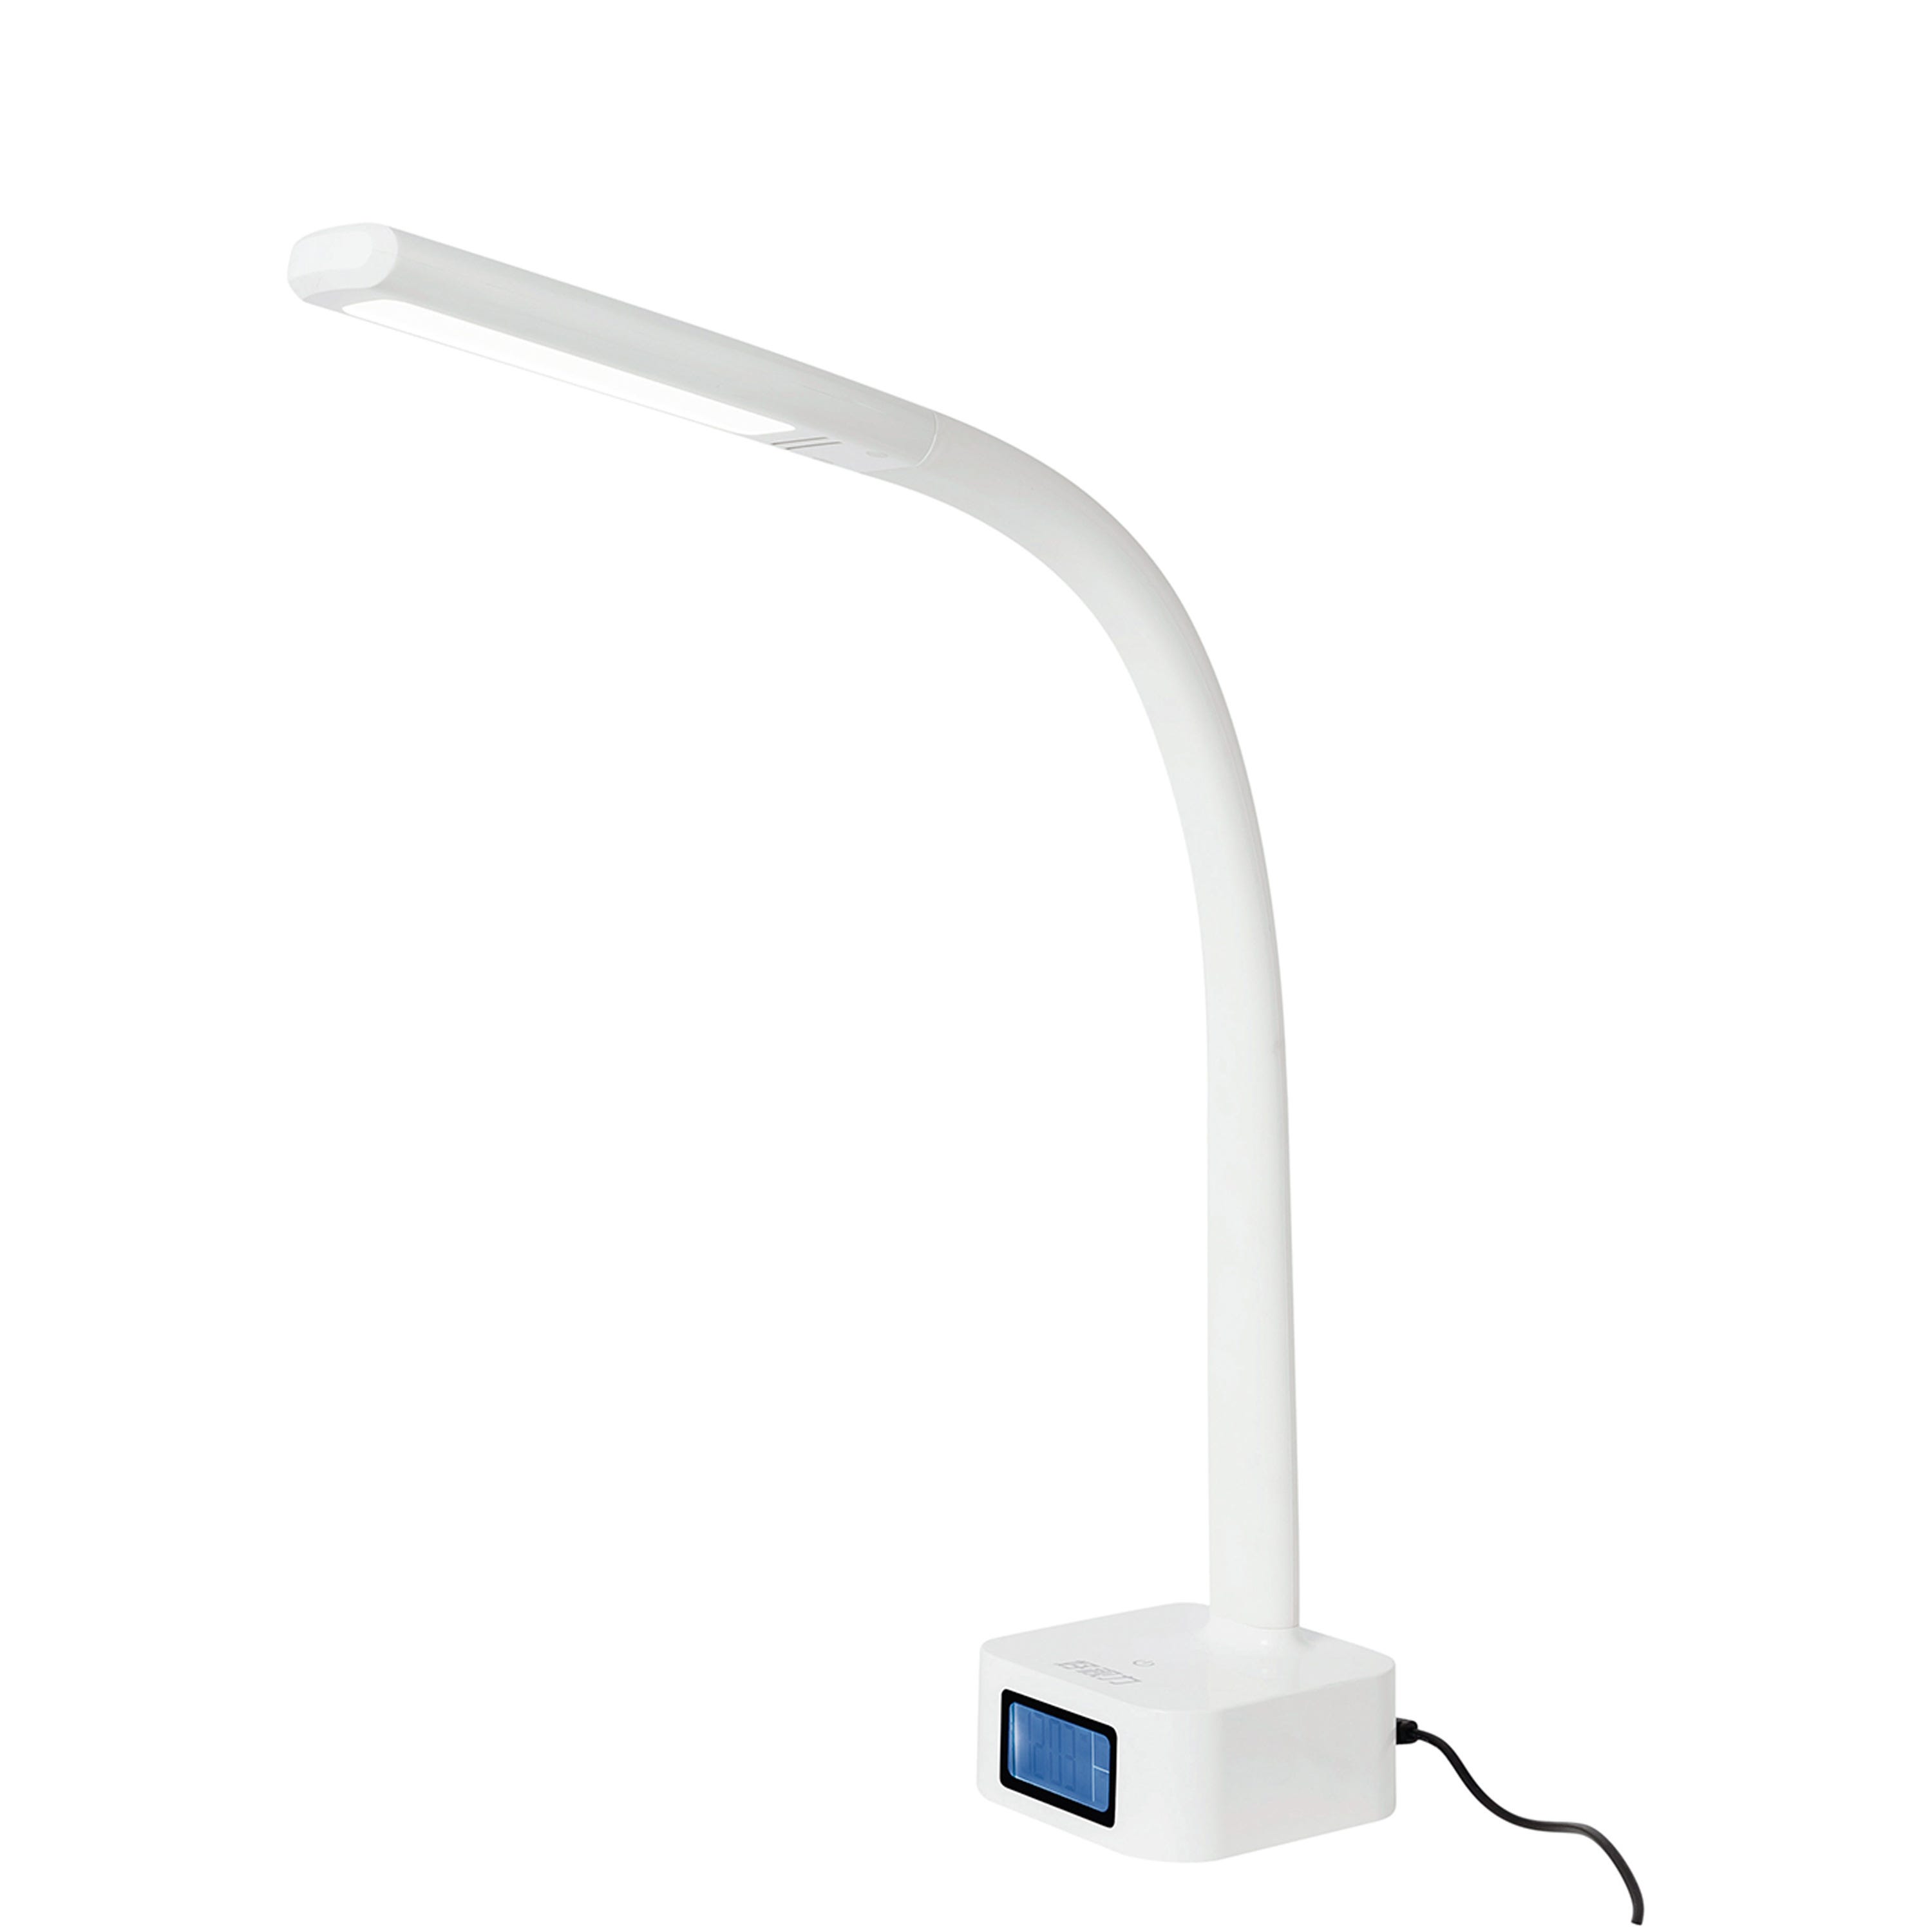 Lampada da scrivania LED bianca, tattile 8W regolabile e con porta USB